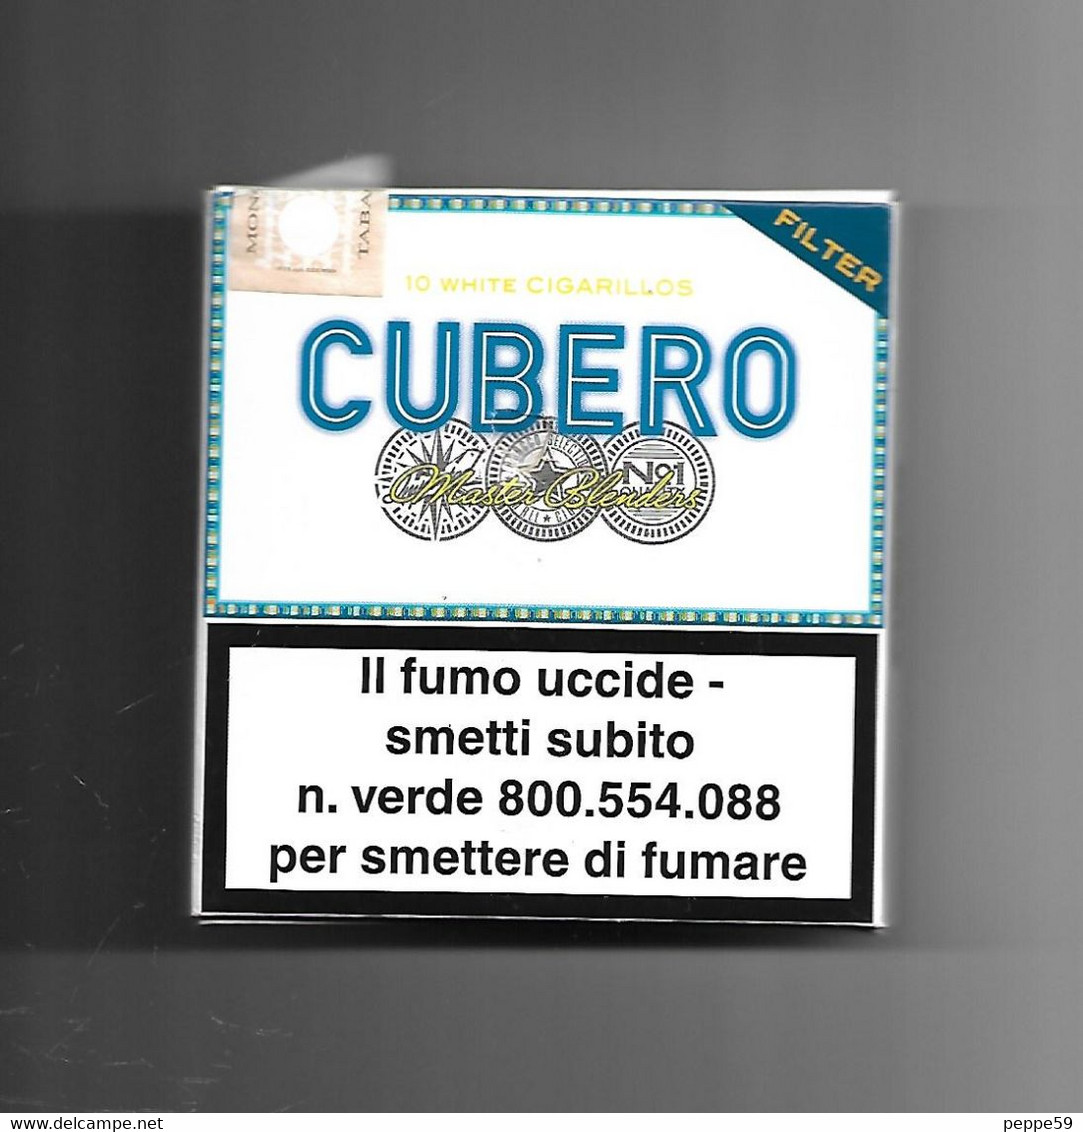 Tabacco Pacchetto Di Sigari Italia - 10 Cubero N.02  - (vuoto)  Tobacco-Tabac-Tabak-Tabaco - Sigarenkisten (leeg)